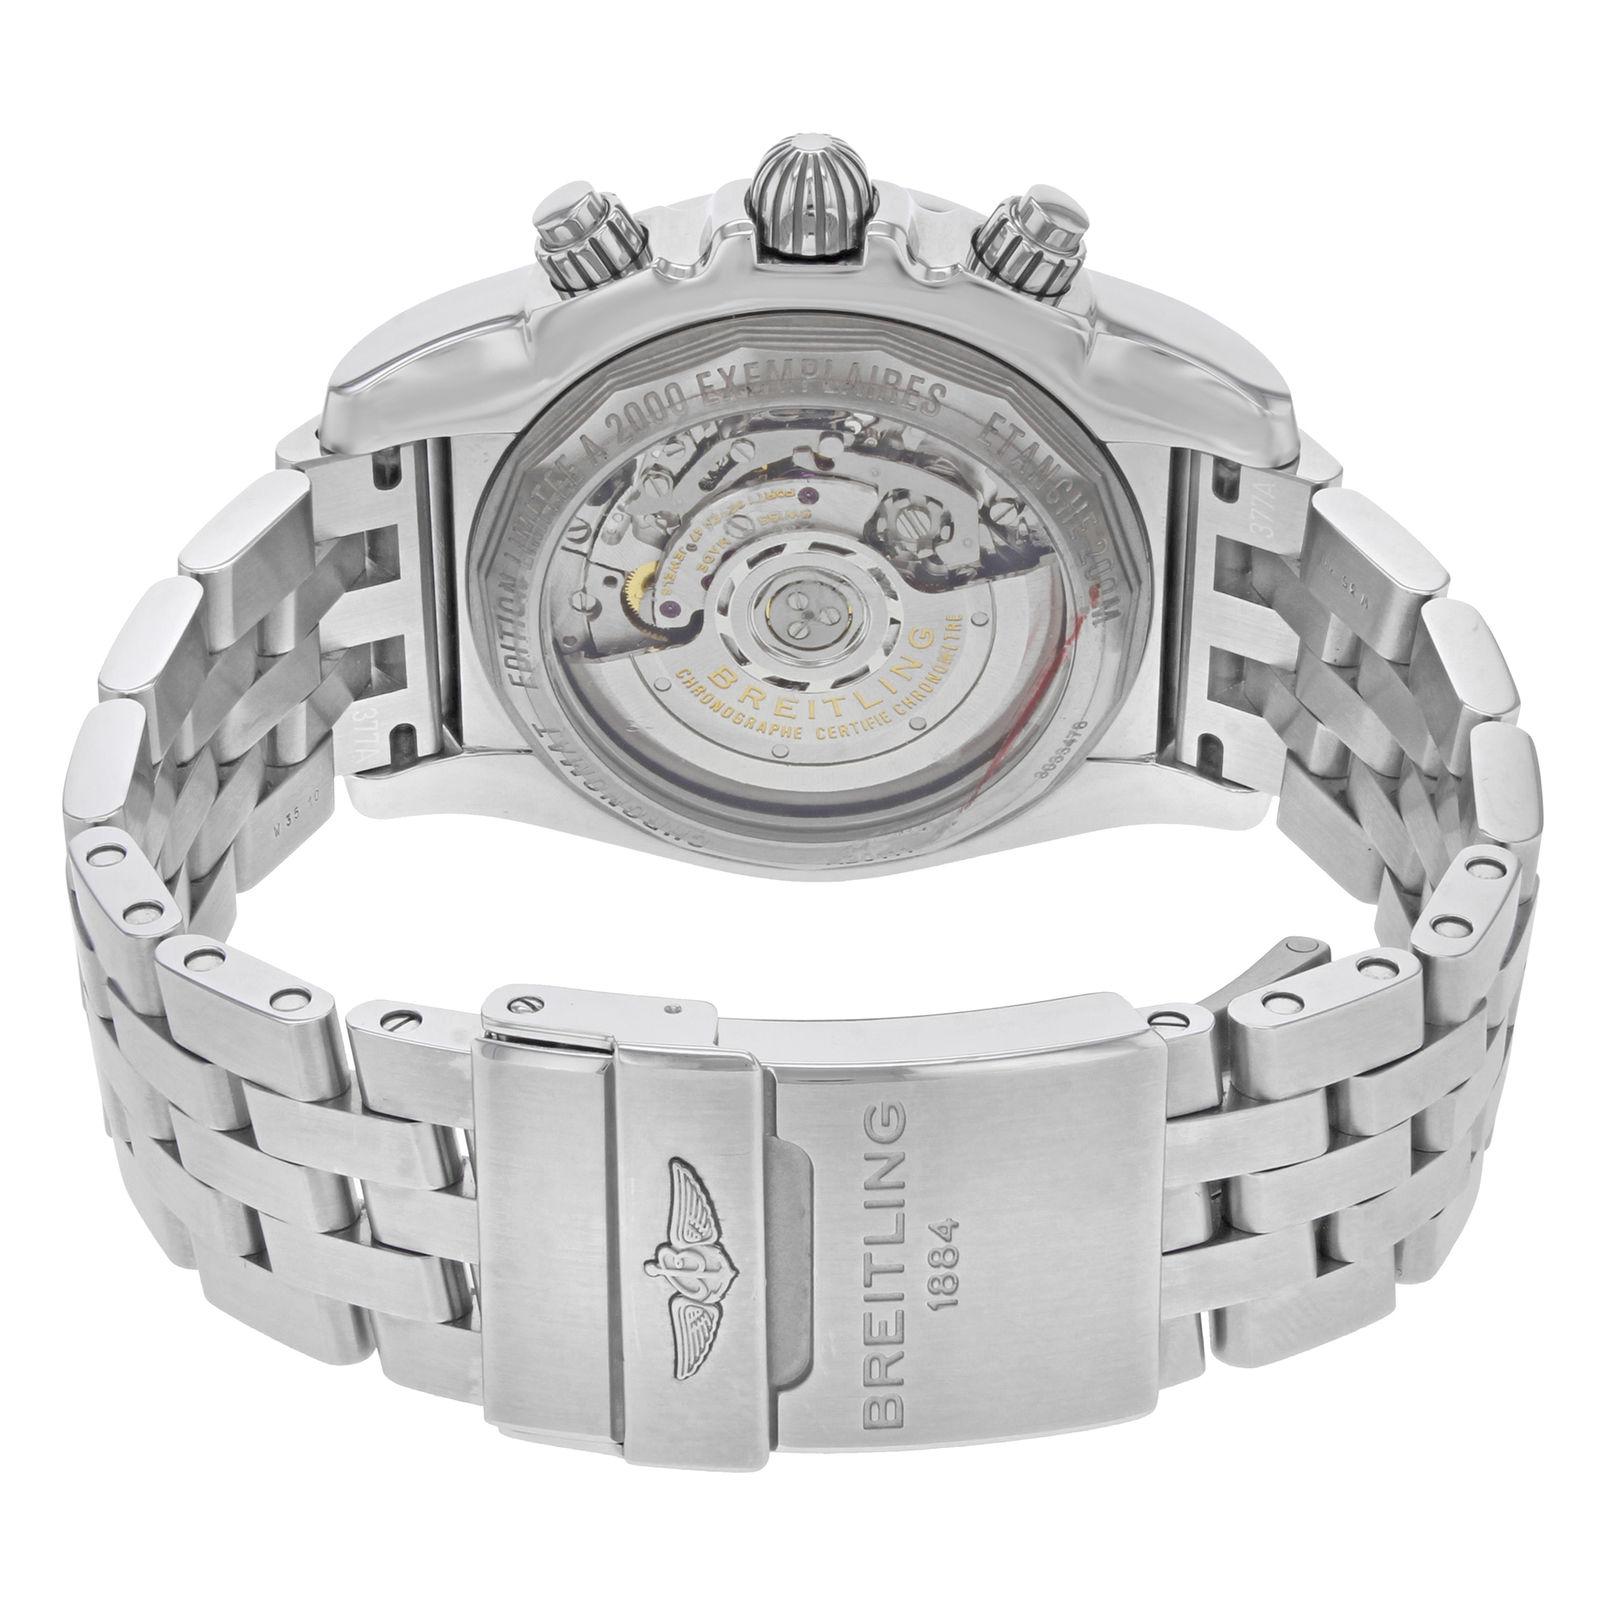 Breitling Chronomat 44 01 Steel Automatic Men's Watch AB011110/BA50-377A 1